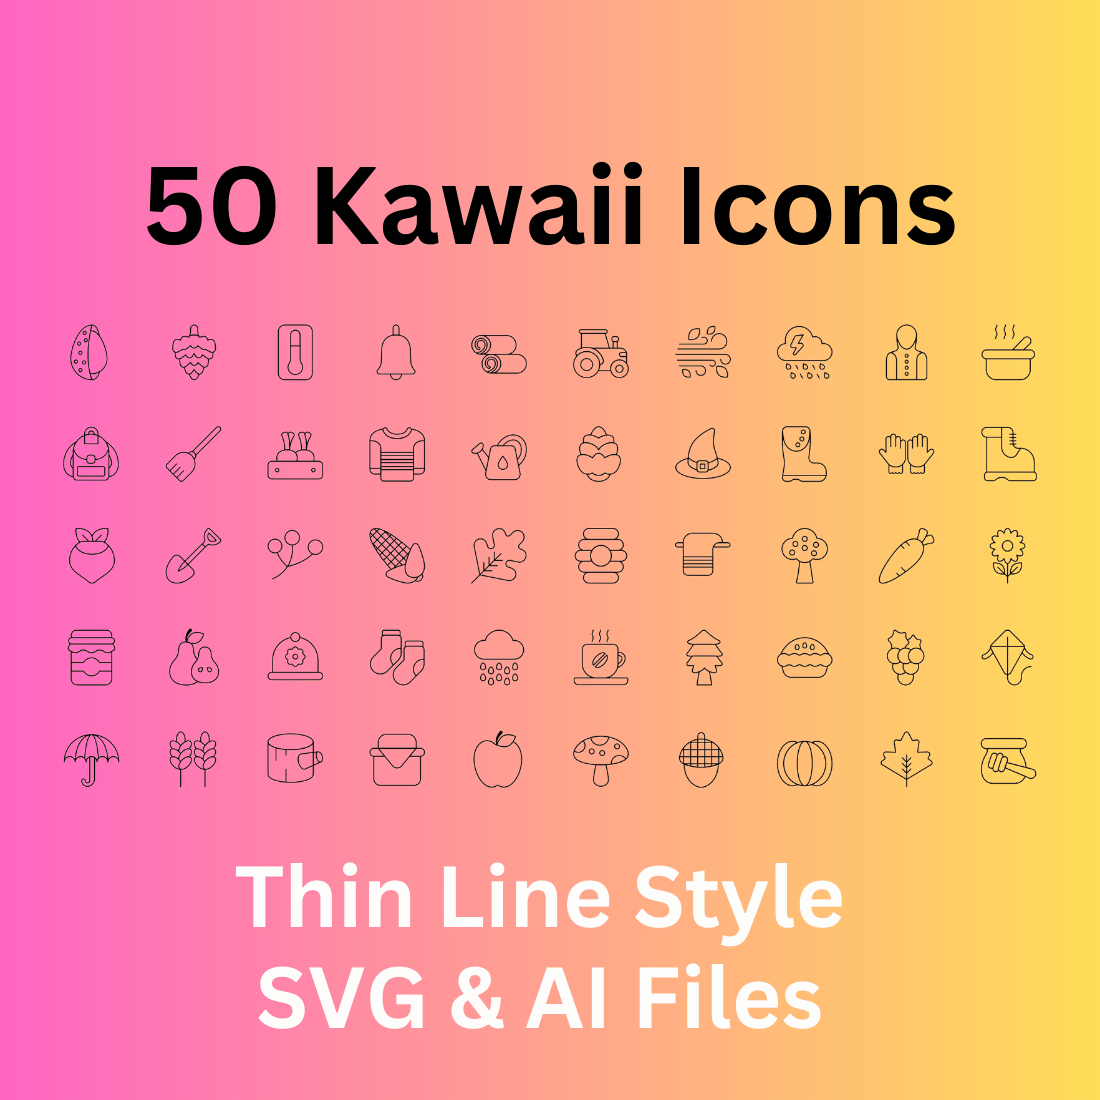 Kawaii Icon Set 50 Outline Icons - SVG And AI Files cover image.